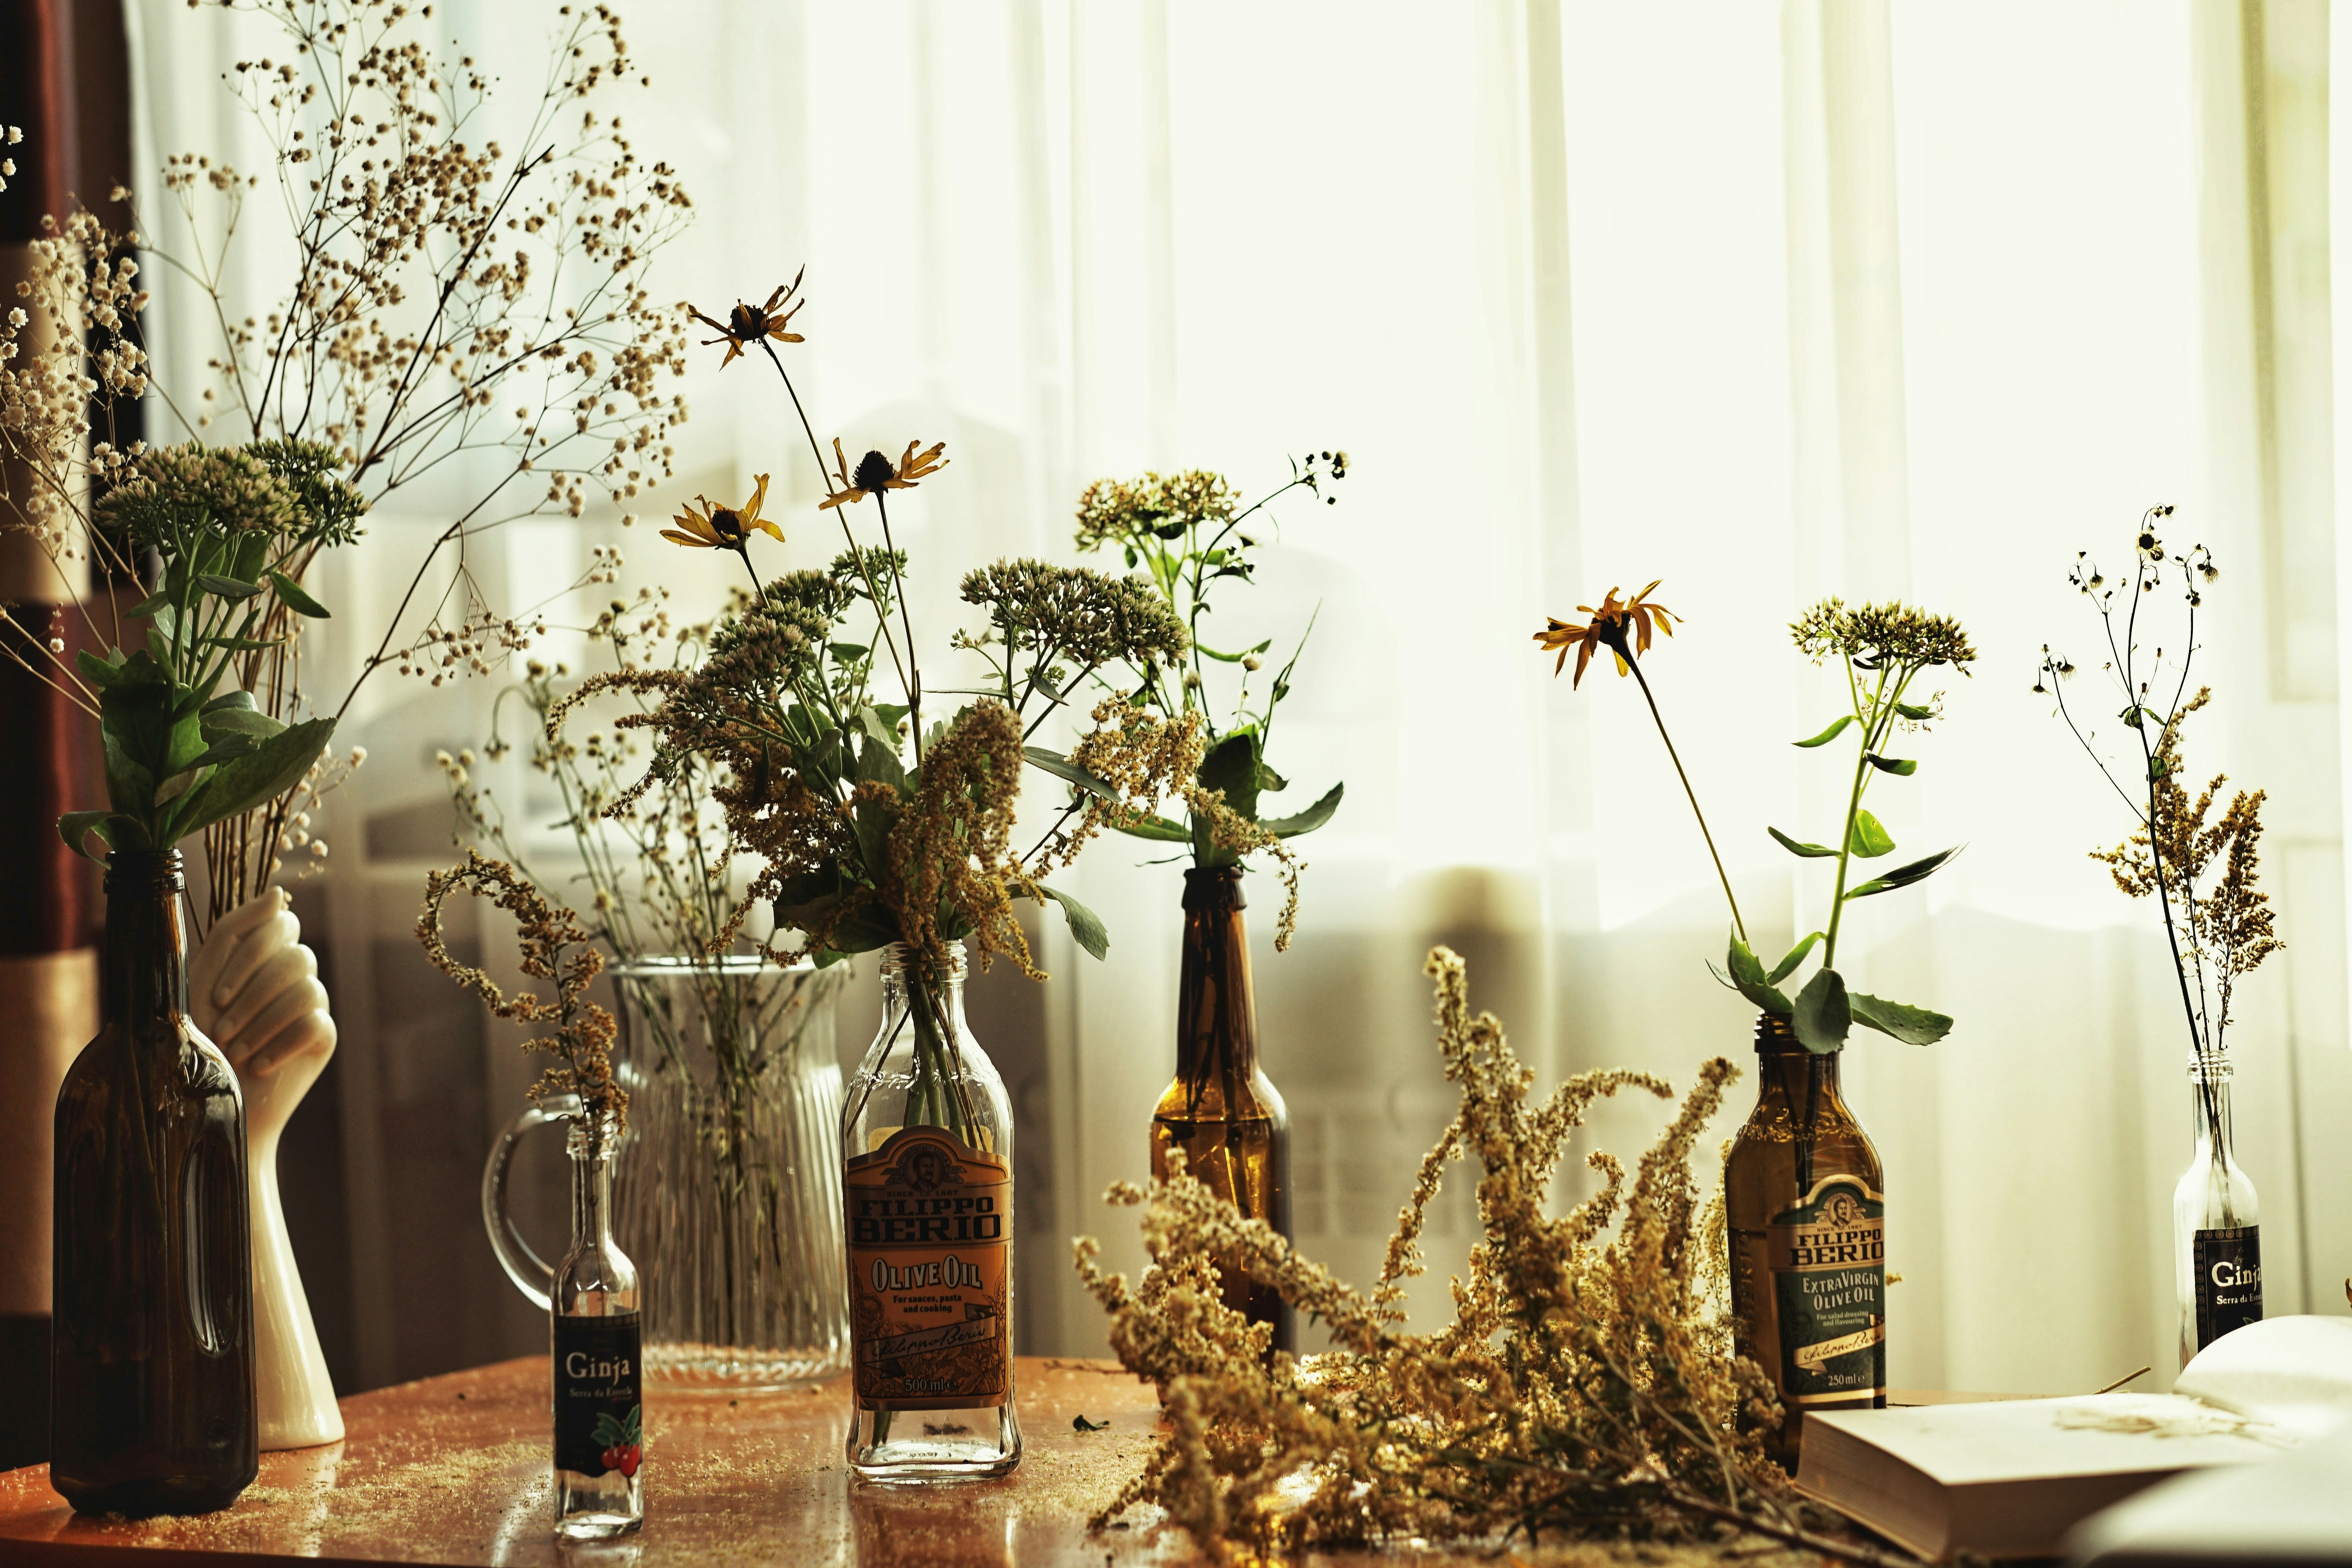 clear glass bottle beside white flowers in clear glass vase